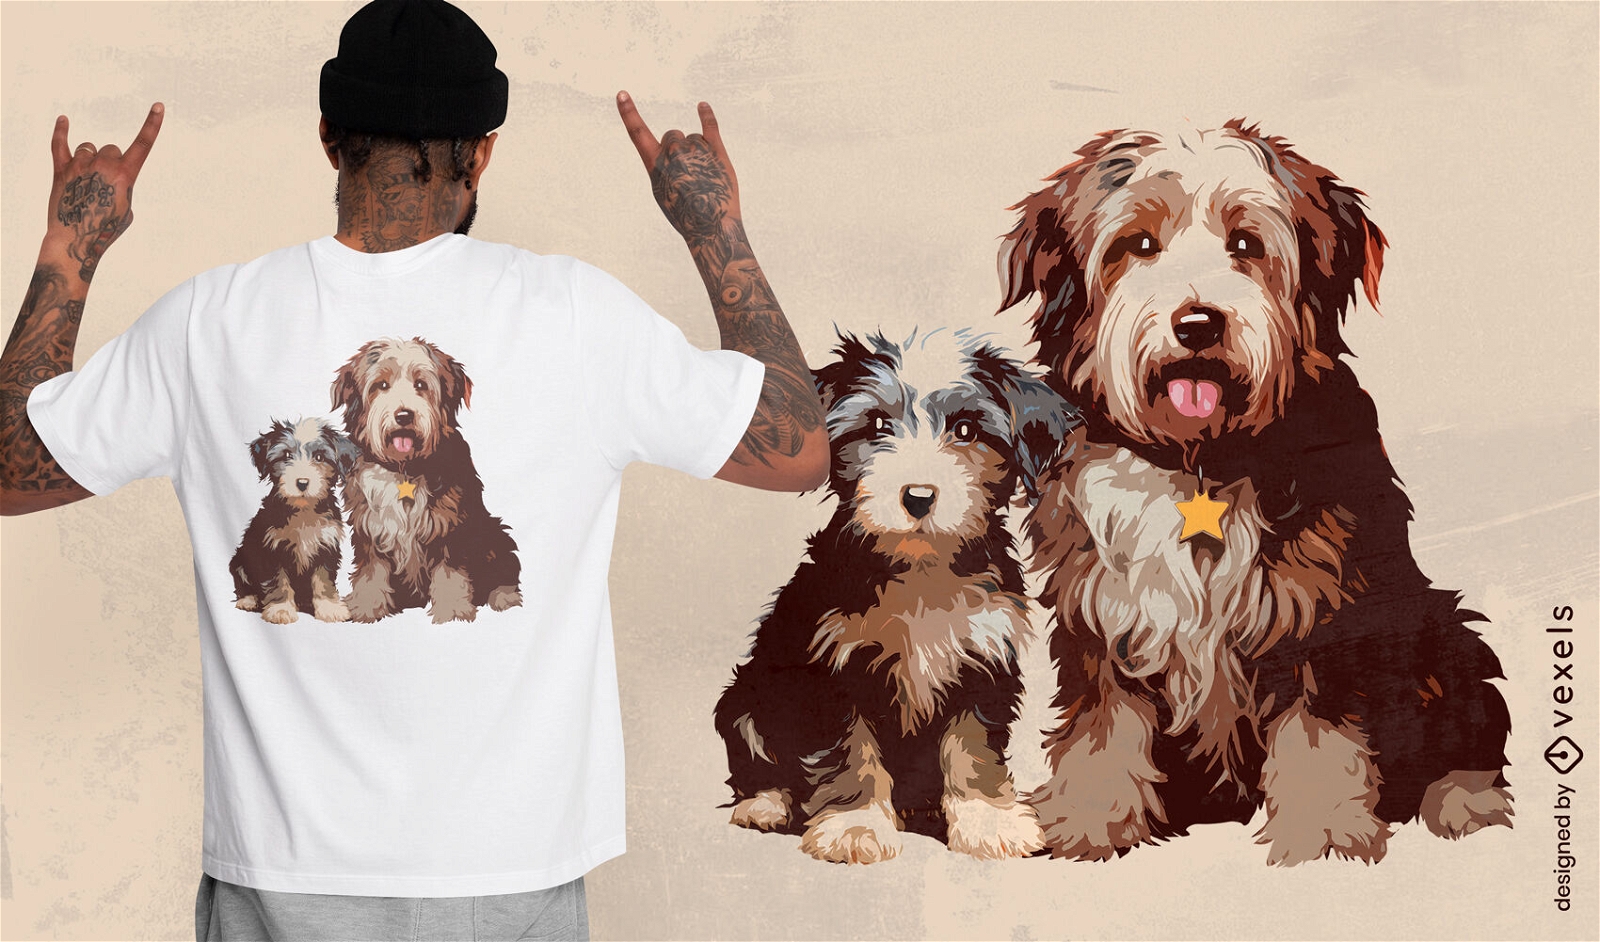 T-Shirt-Design mit zwei Bob Tail-Hunden